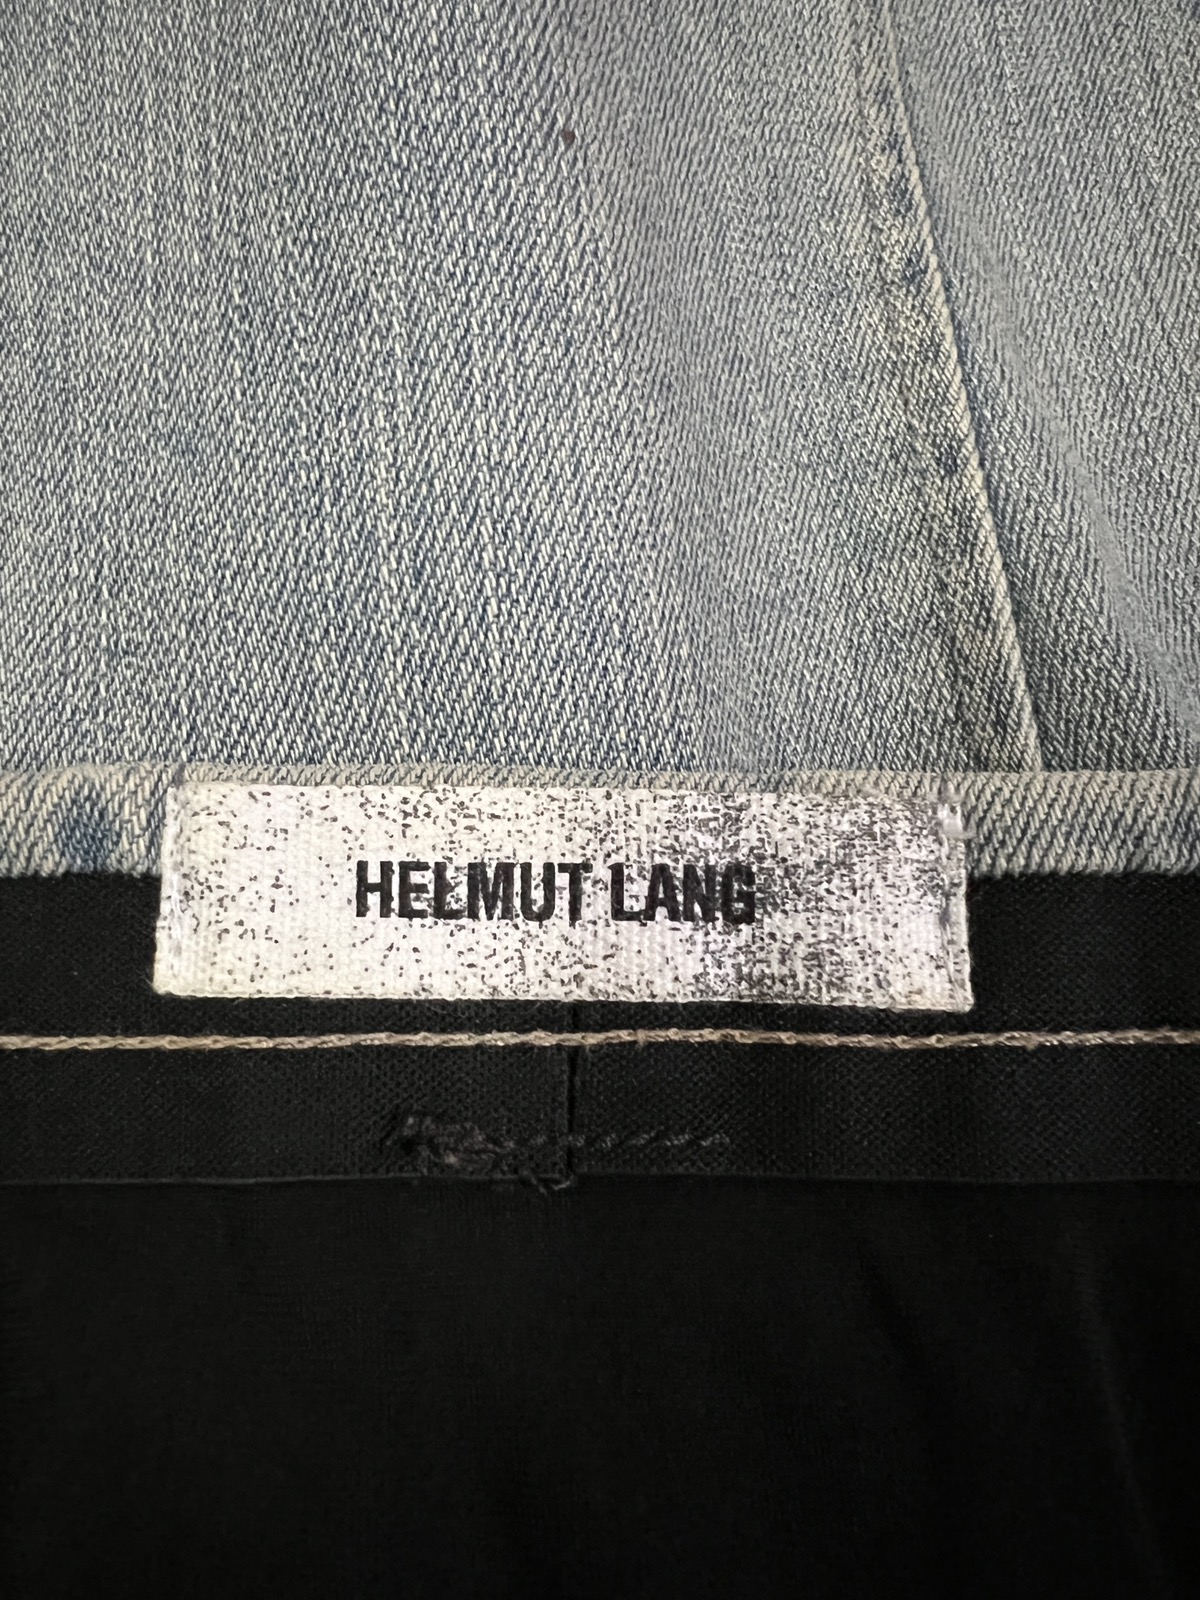 Vintage Helmut Lang Black/Distressed Jeans Mini Skirt - 3